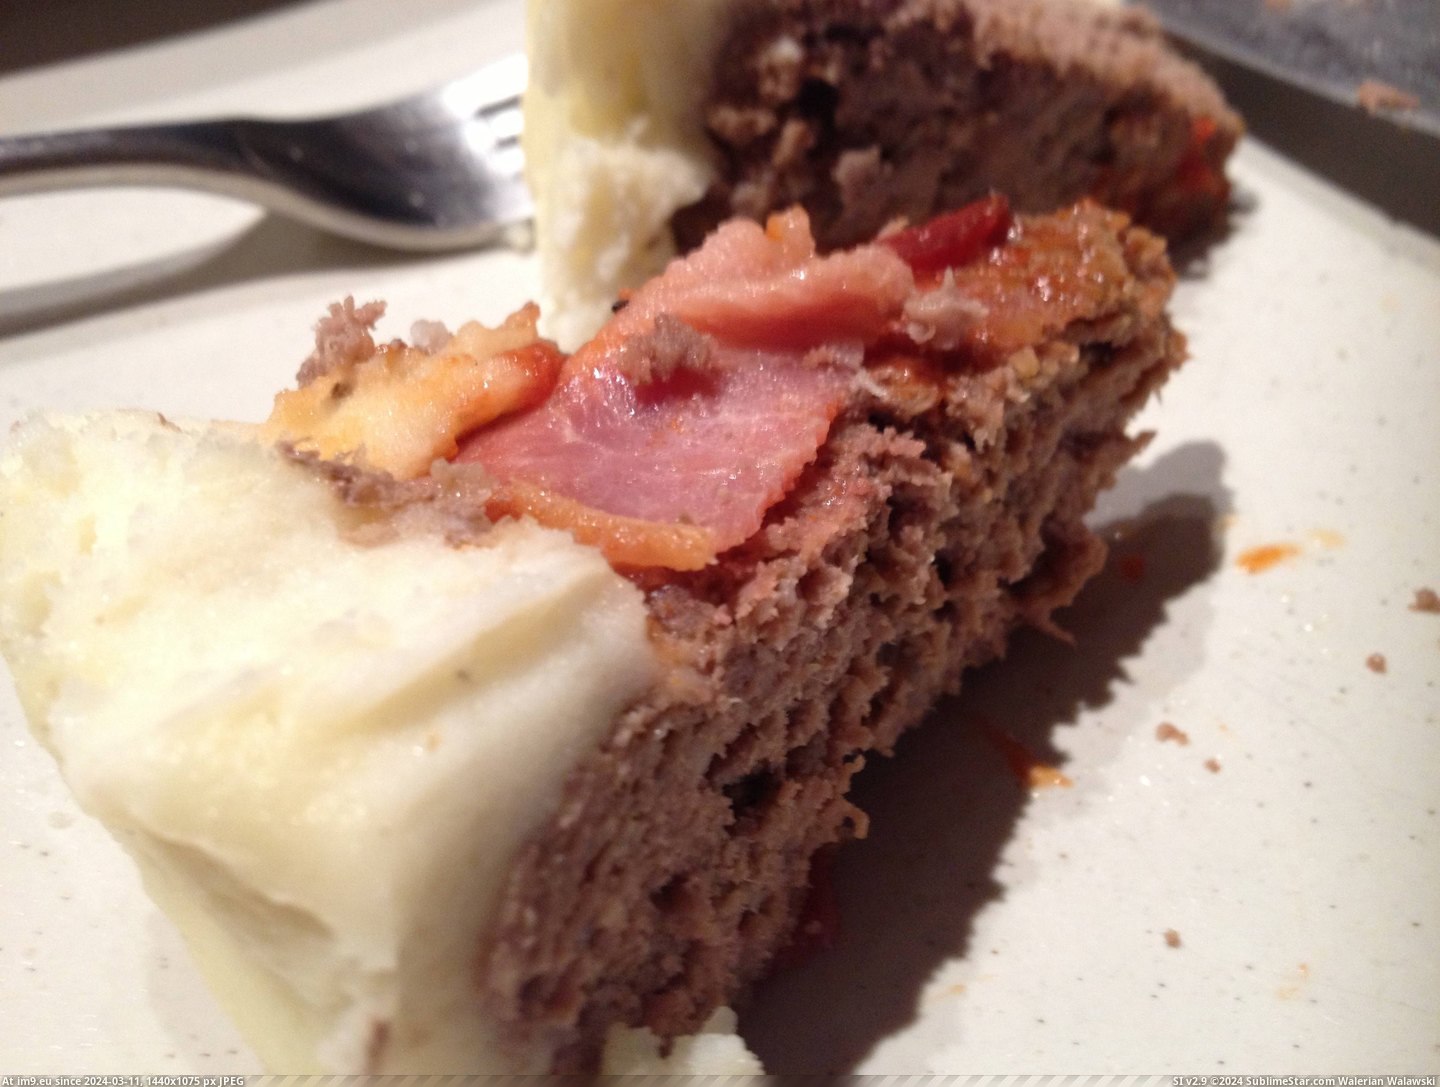  #Meatcake  [Pics] Meatcake 14 Pic. (Bild von album My r/PICS favs))